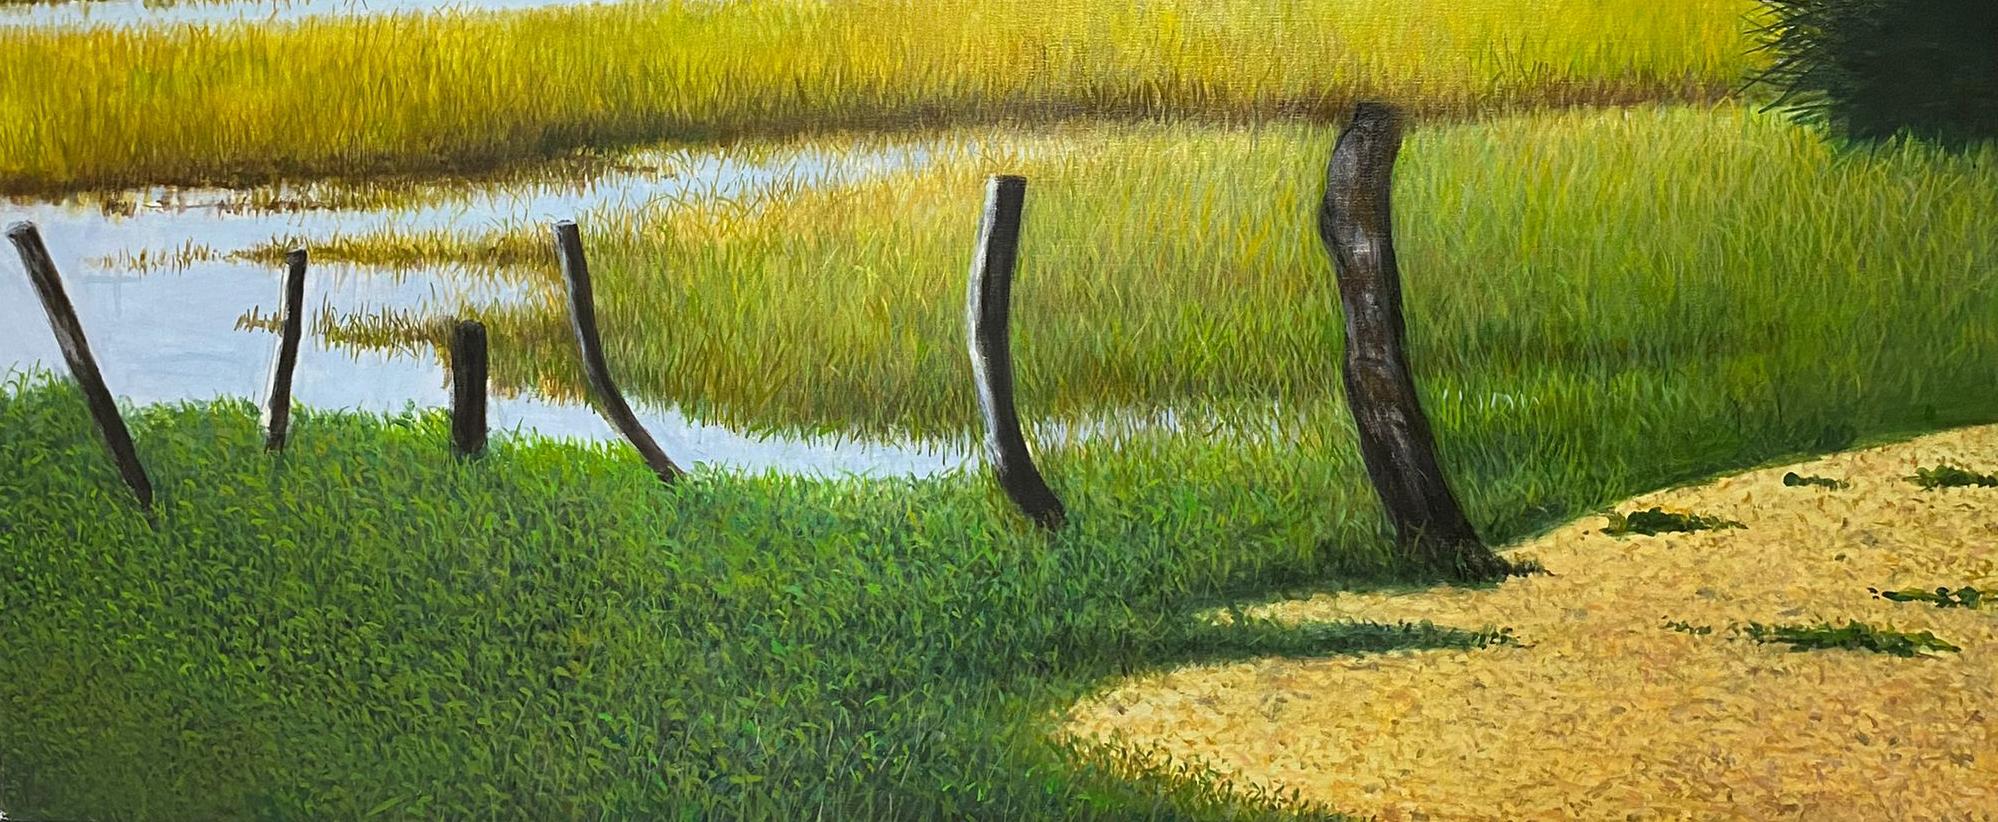 Carlos Hernández Guerra, Estelos, Oil on Canvas, 2015 For Sale 1